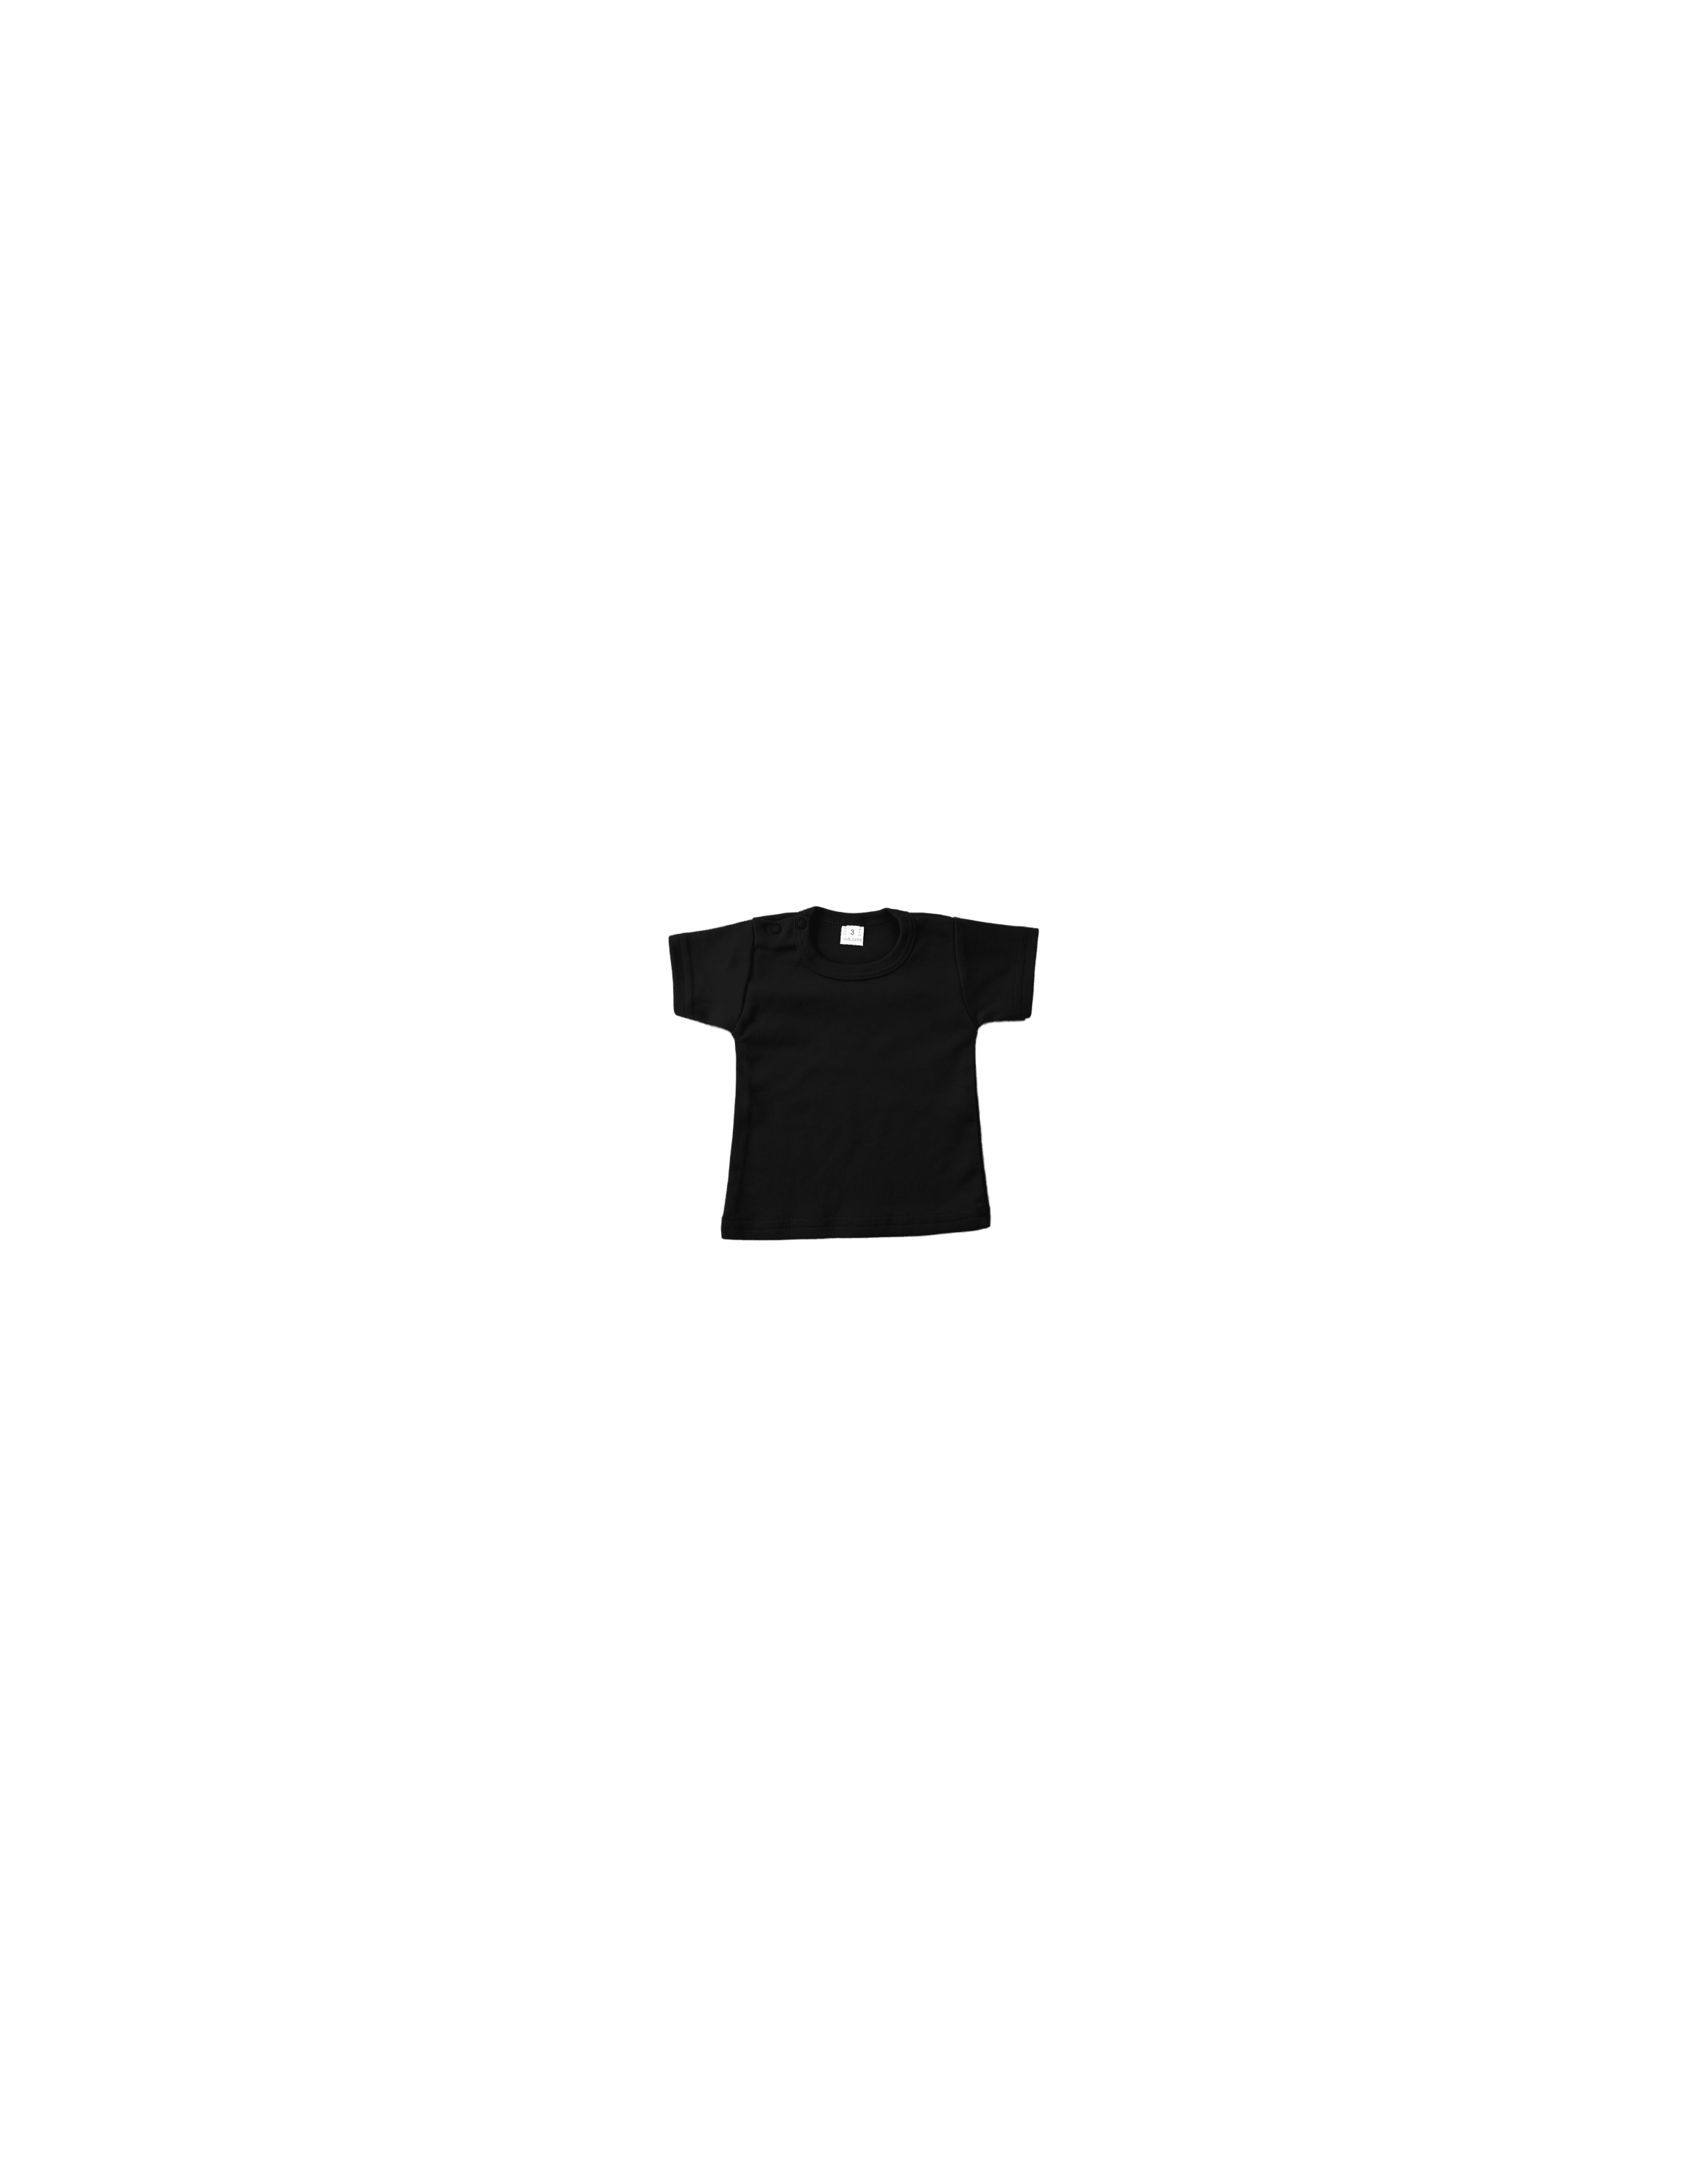 kapitalisme Gewoon heelal Blanco Producten :: T-Shirts :: T-Shirt Korte Mouw :: Korte Mouw T-shirt -  Zwart